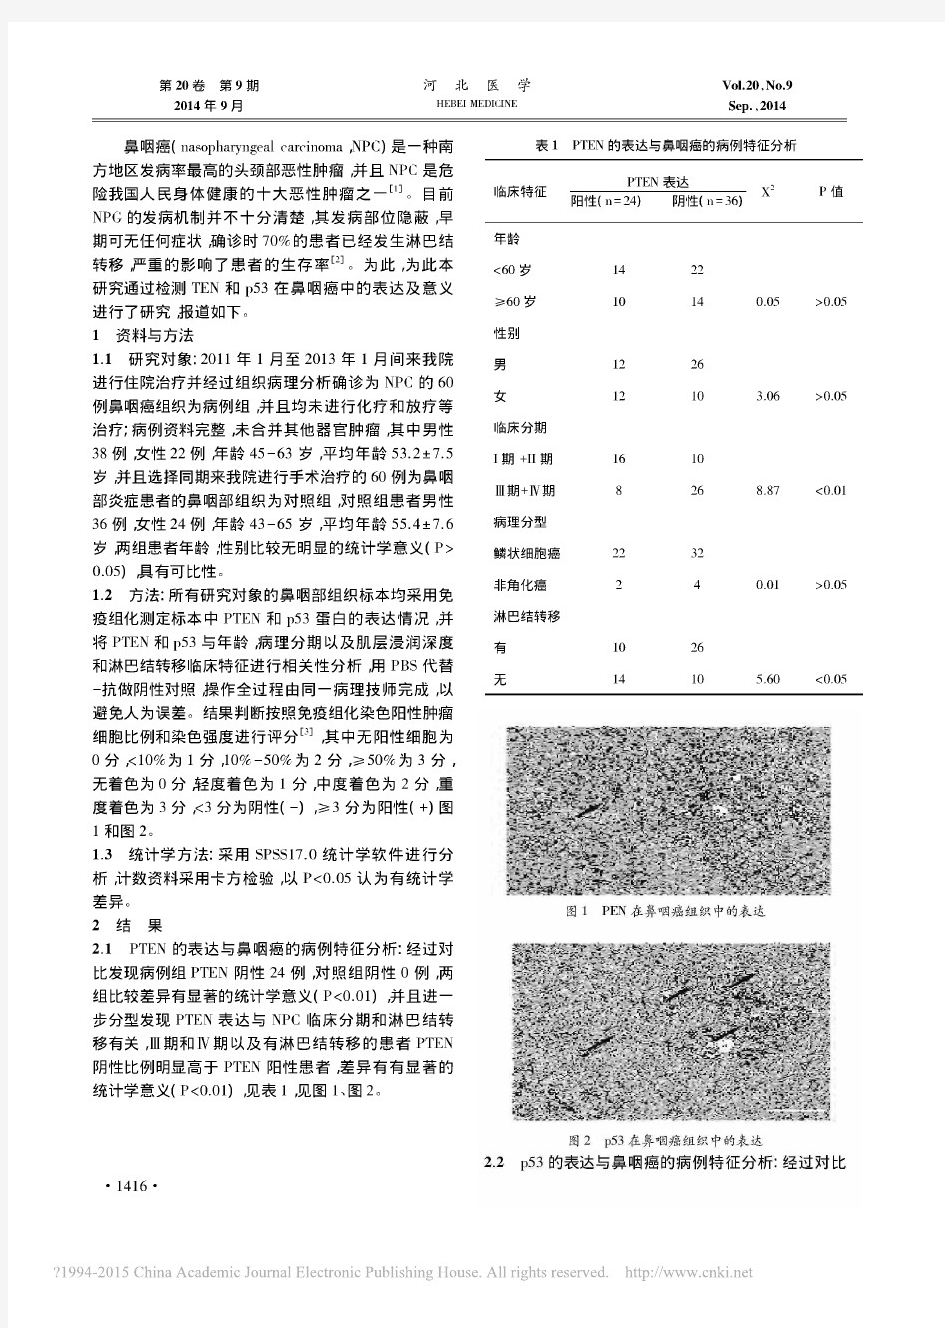 PTEN与p53在鼻咽癌中的表达及意义_郑大勇